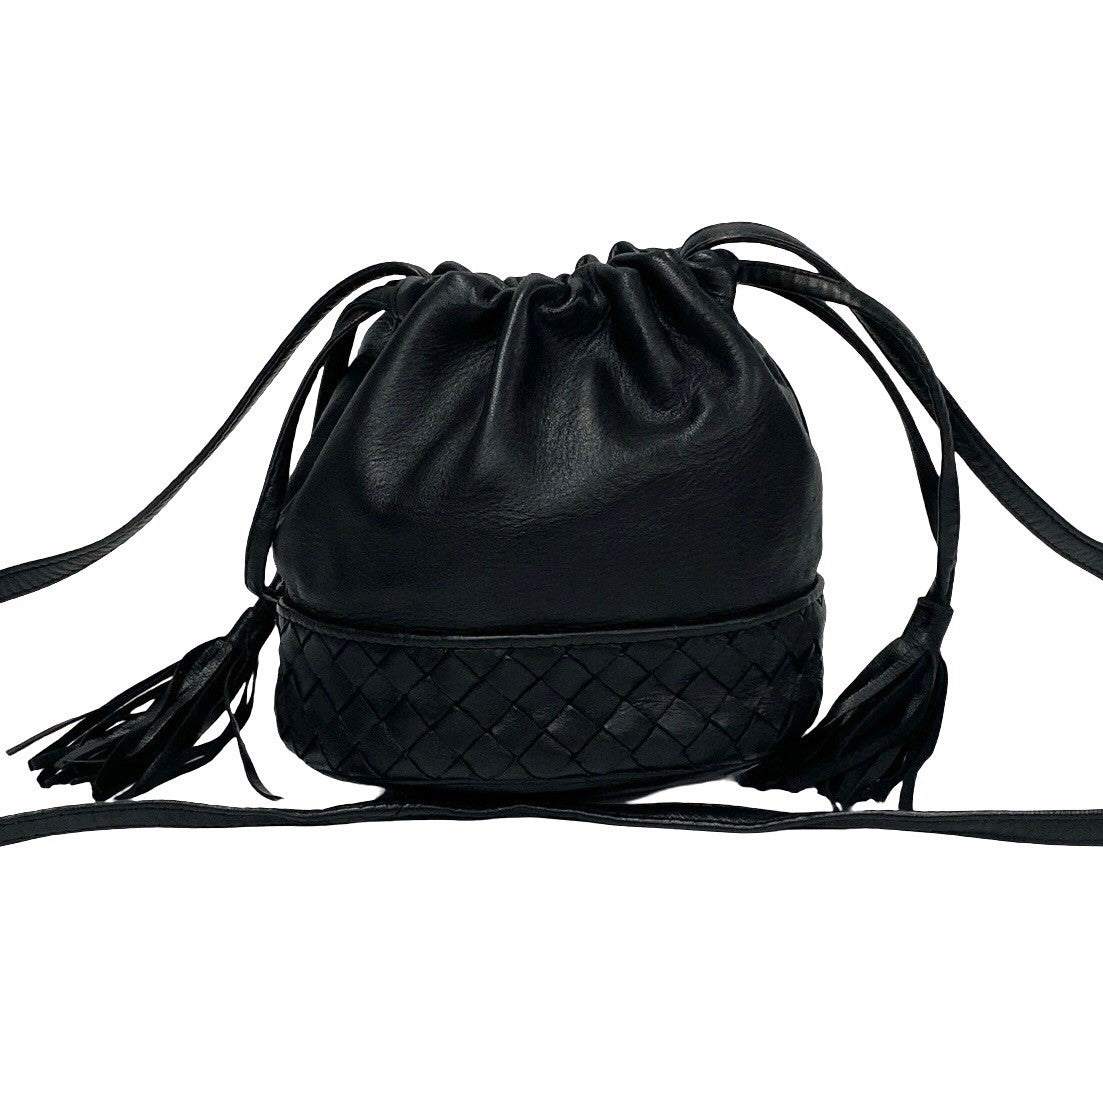 Bottega Veneta Intrecciato Drawstring Crossbody Bag  Leather Crossbody Bag in Excellent condition